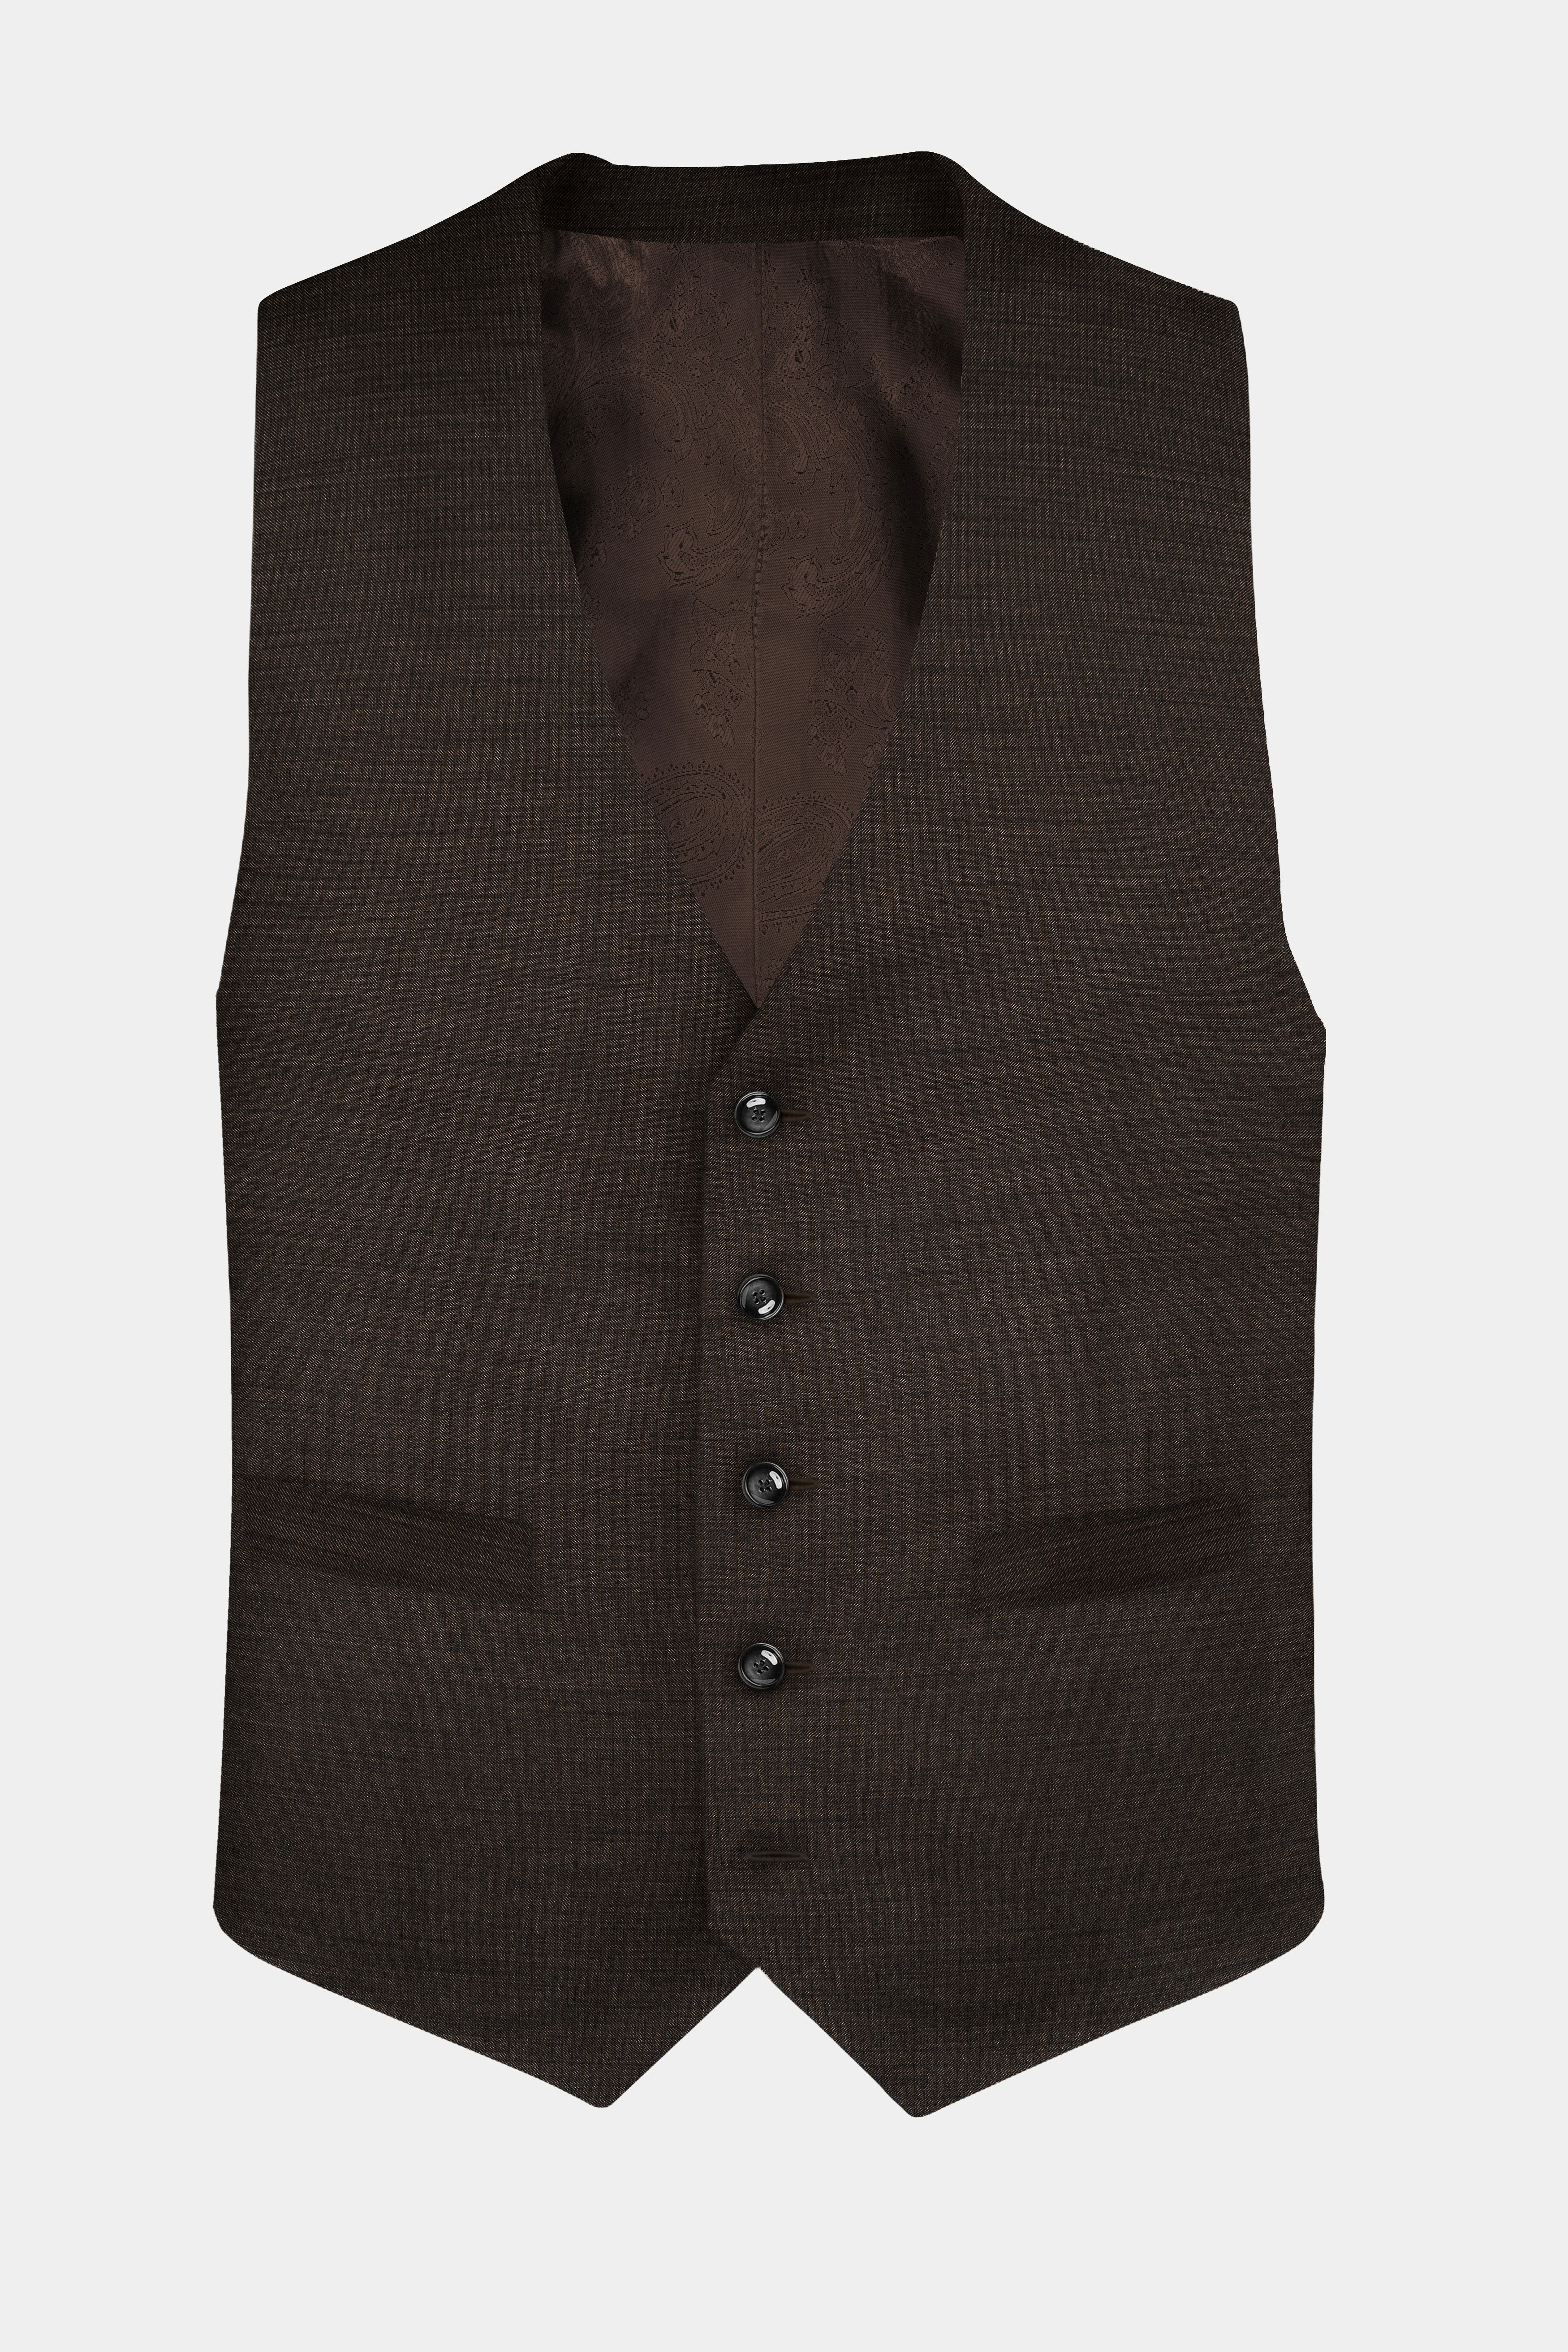 Eclipse Brown Textured Wool Blend Waistcoat